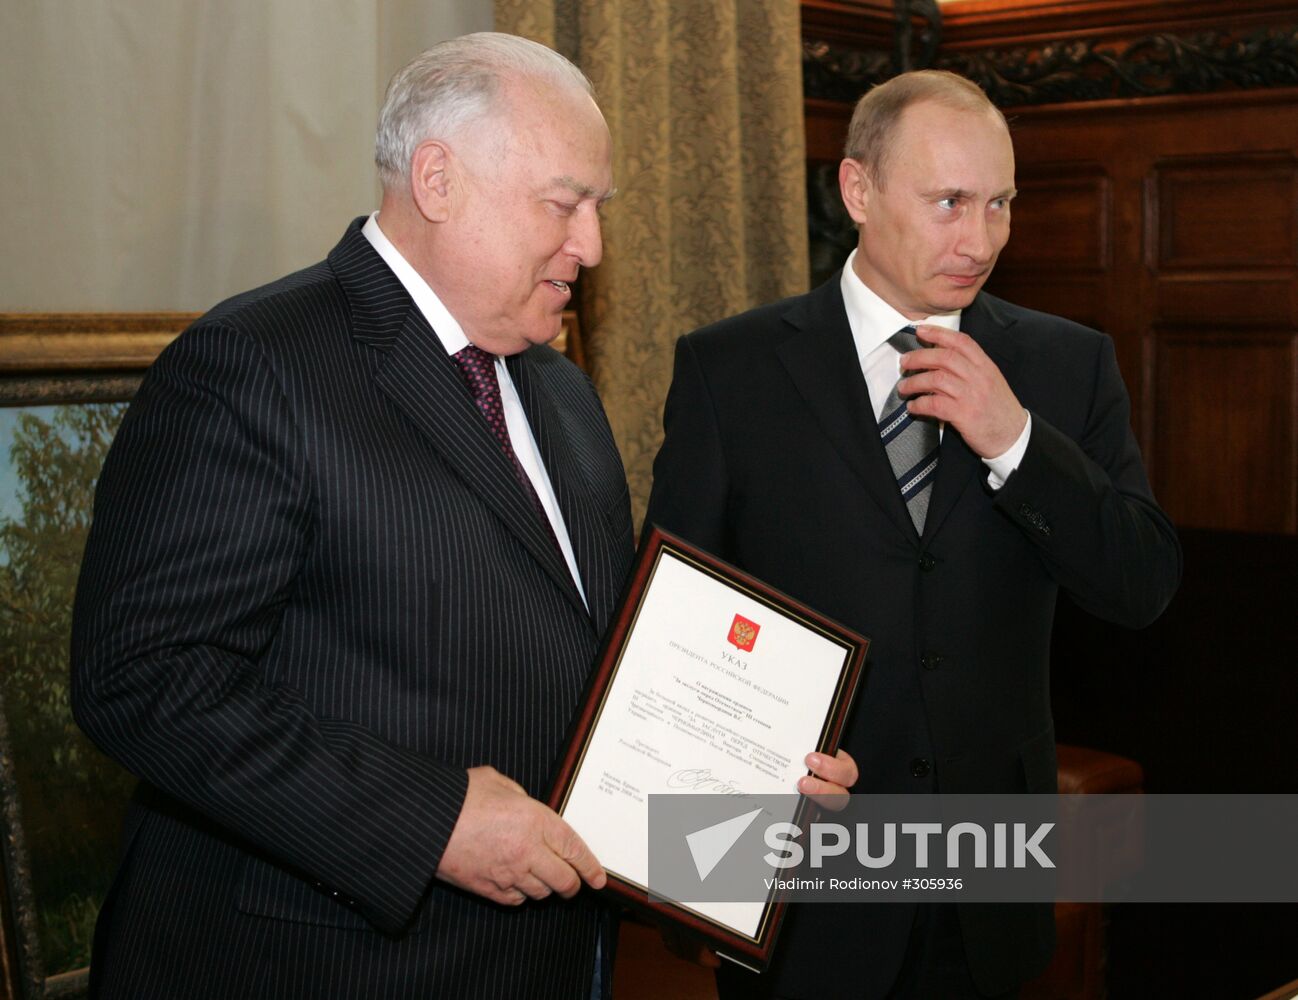 Vladimir Putin and Viktor Chernomyrdin